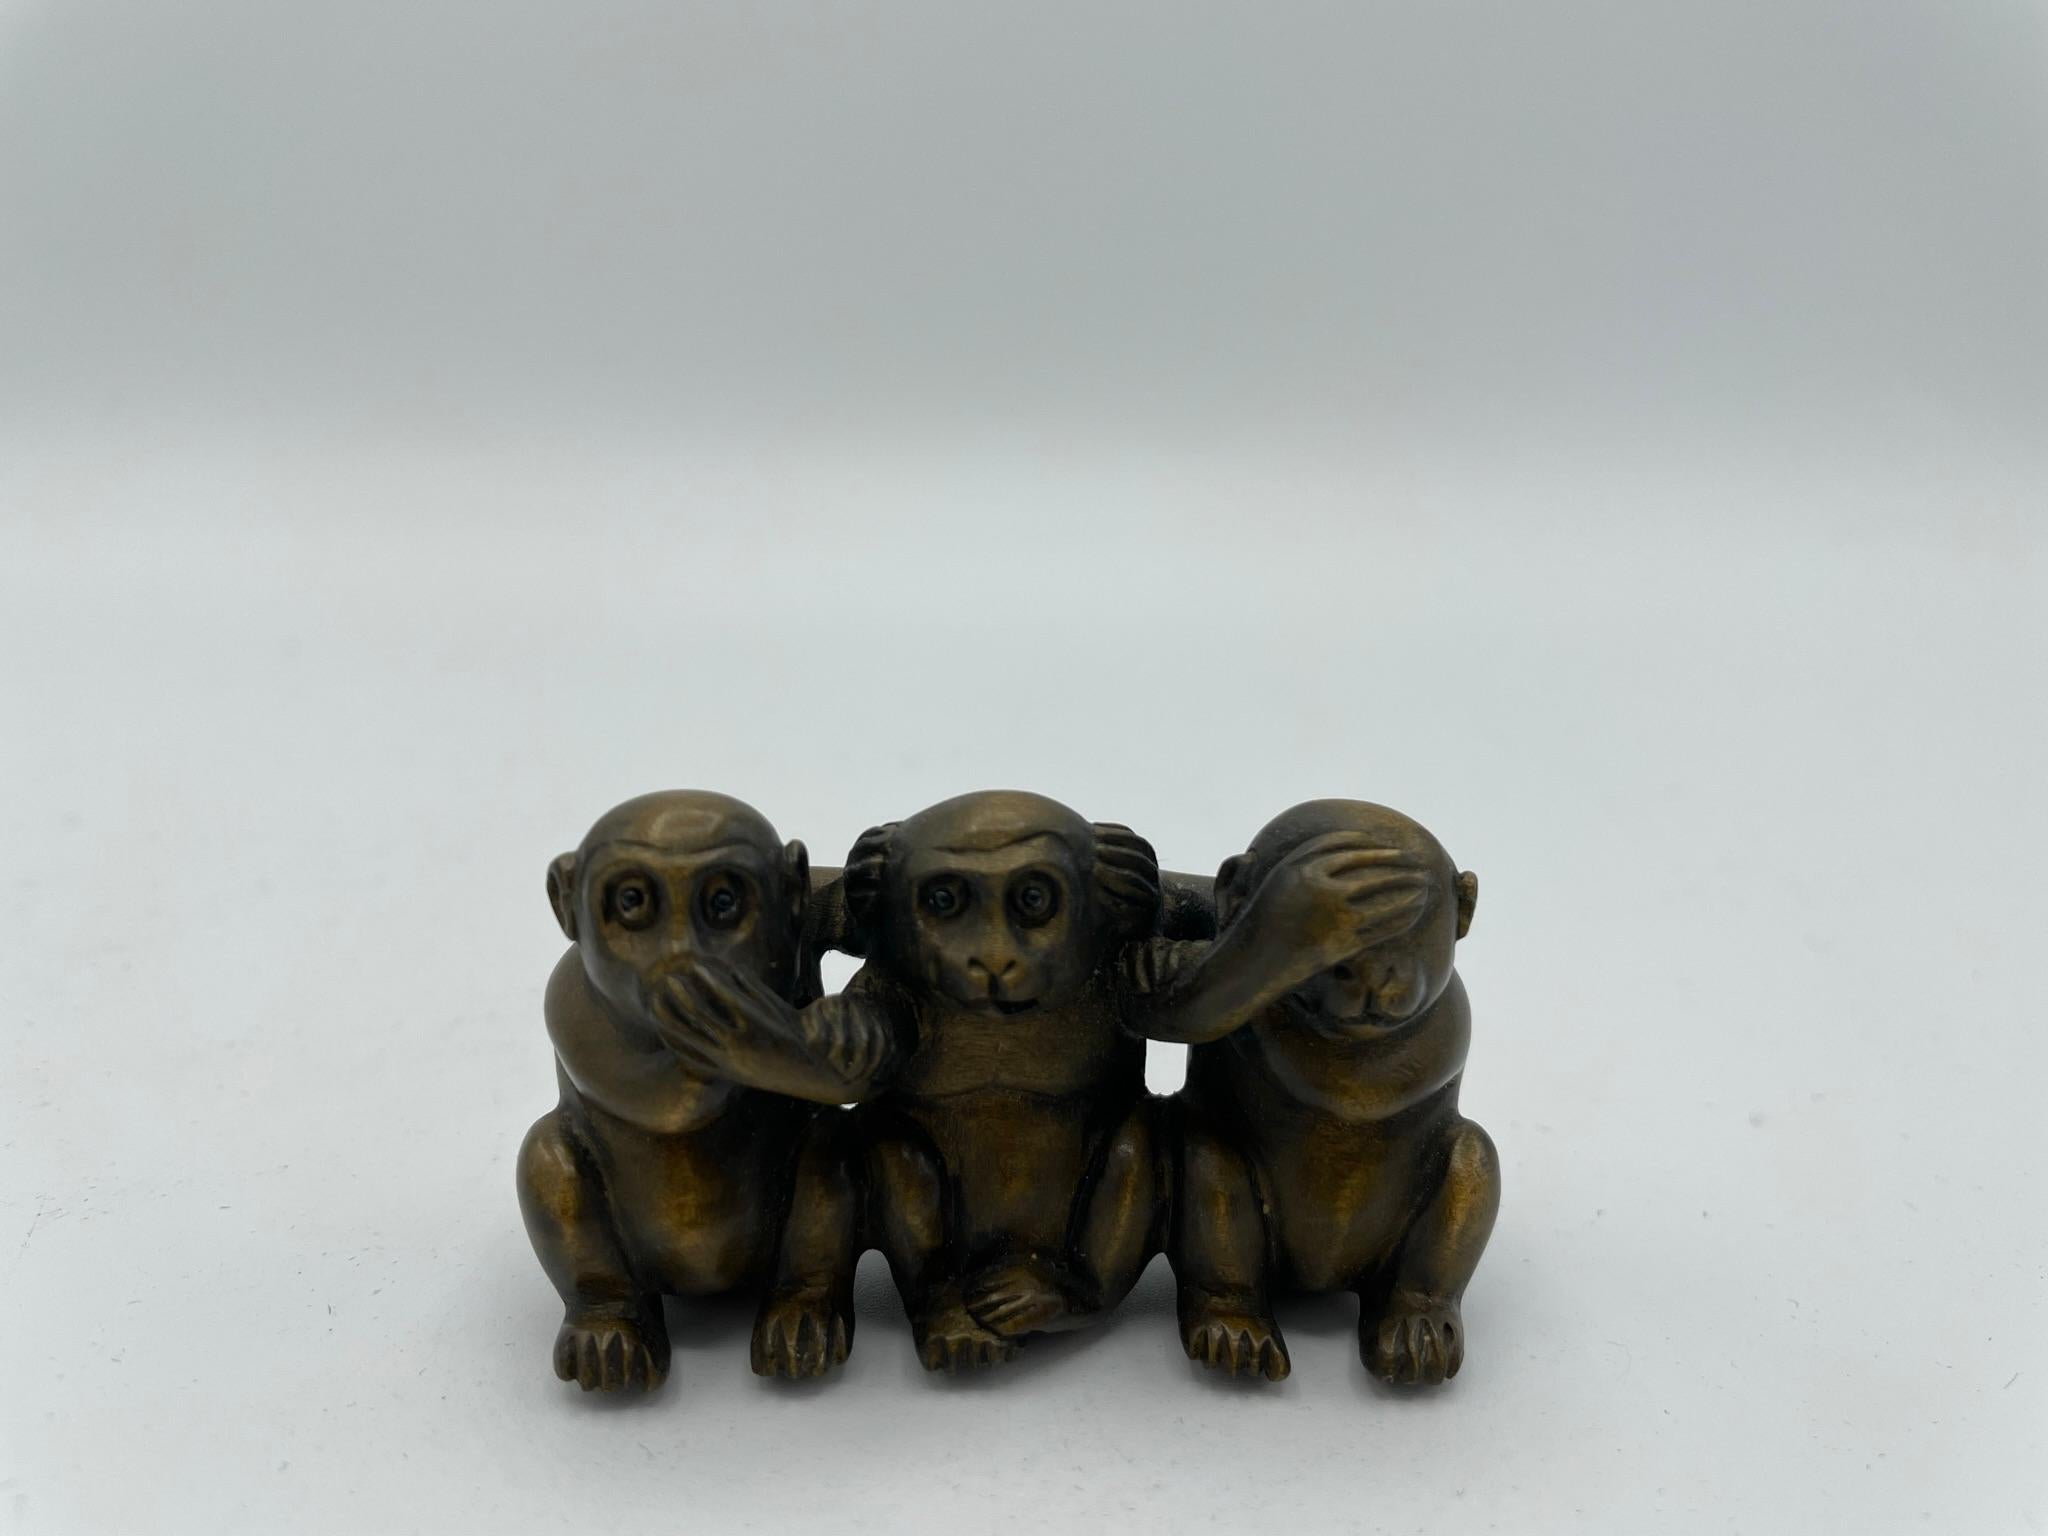 Antique Japanese Wooden Netsuke 'Three Monkeys' Edo Era 1800s 1